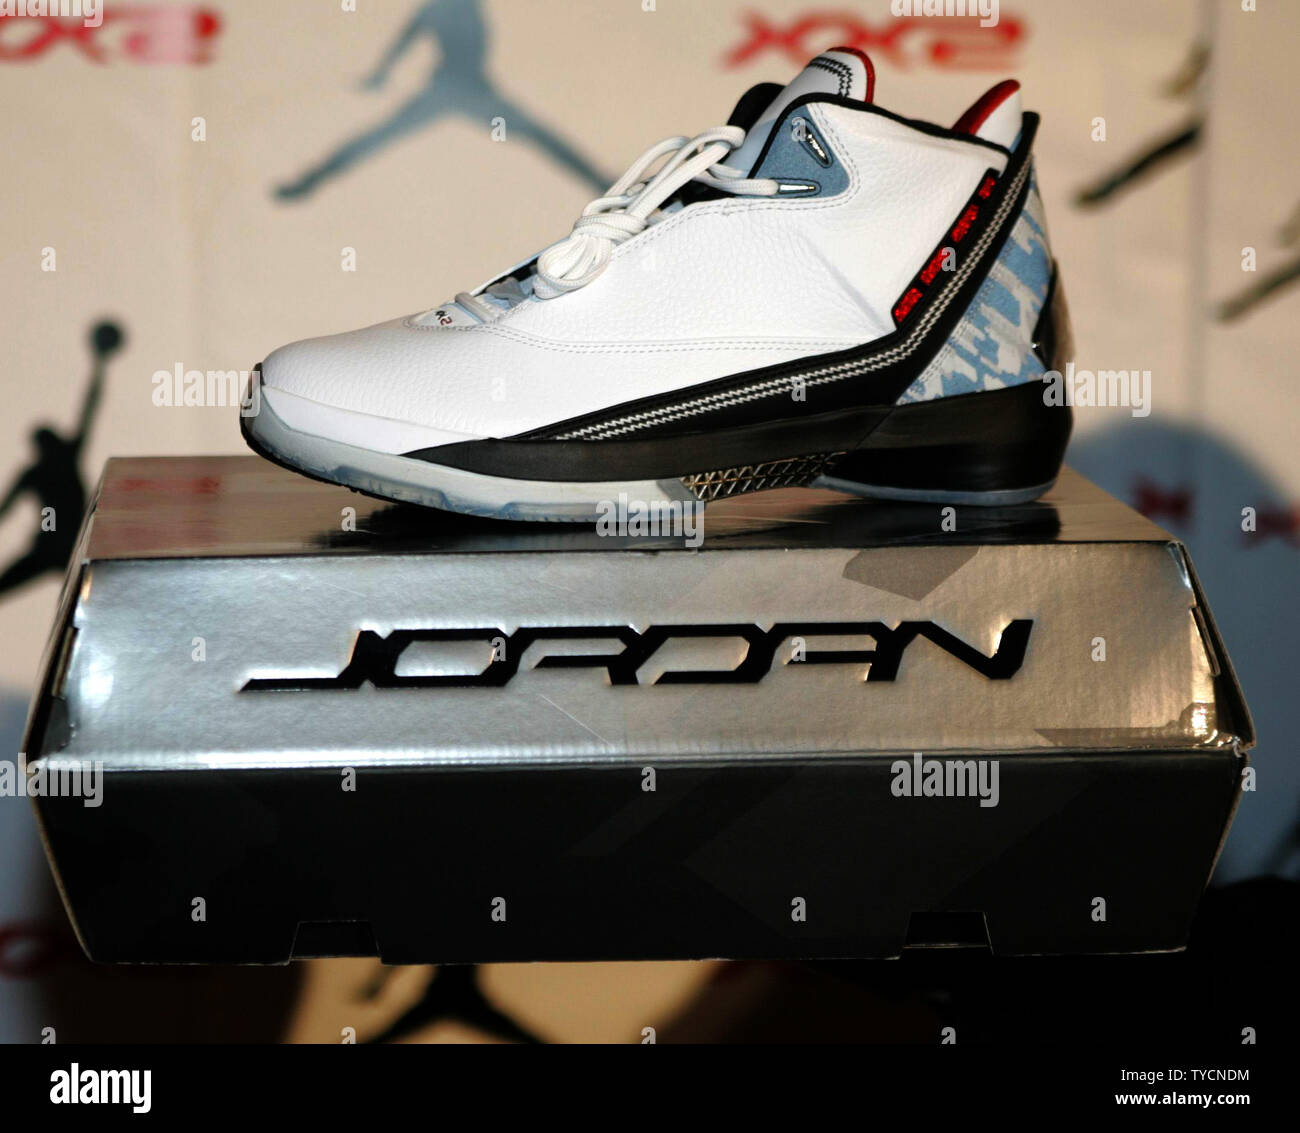 The new XX2 Air Jordan basketball shoe is shown at Michael Jordan's  exclusive celebrity kickoff of the new Air Jordan XX2, held at the MGM  Grand in Las Vegas on February 16,